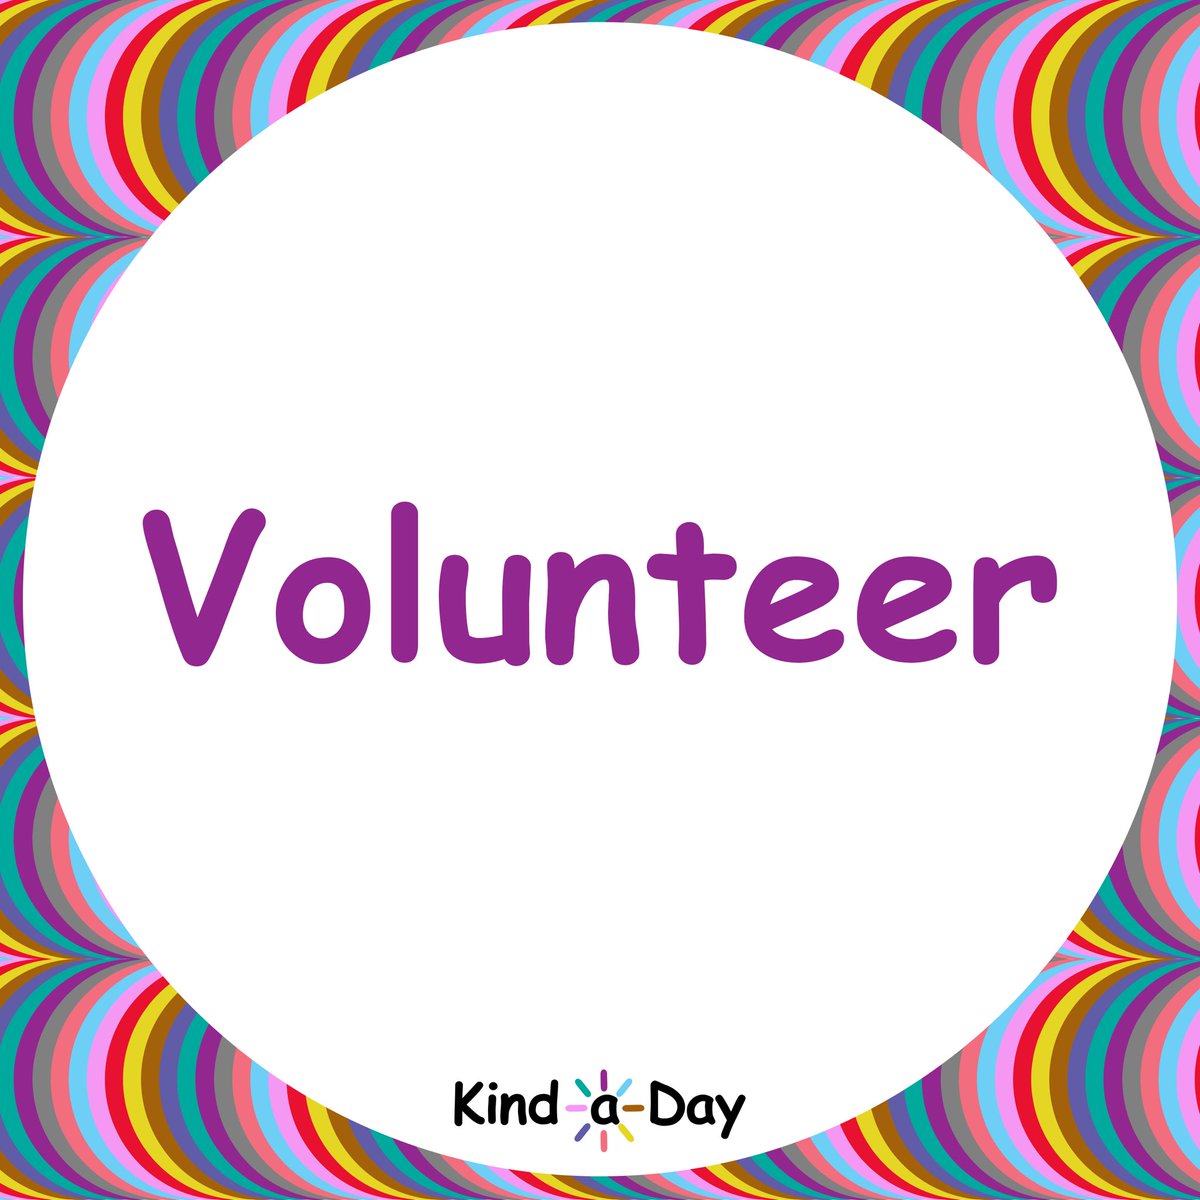 Tuesday Tip: Volunteer 💕
 
#volunteer #VolunteerMonth #volunteering #GiveToOthers #kind #BeKind #kindness #KindLife #ActsOfKindness #SpreadKindness #KindnessMatters #ChooseKindness #KindnessWins #KindaDay #KindnessAlways #KindnessEveryday #Kindness365 #KindnessChallenge